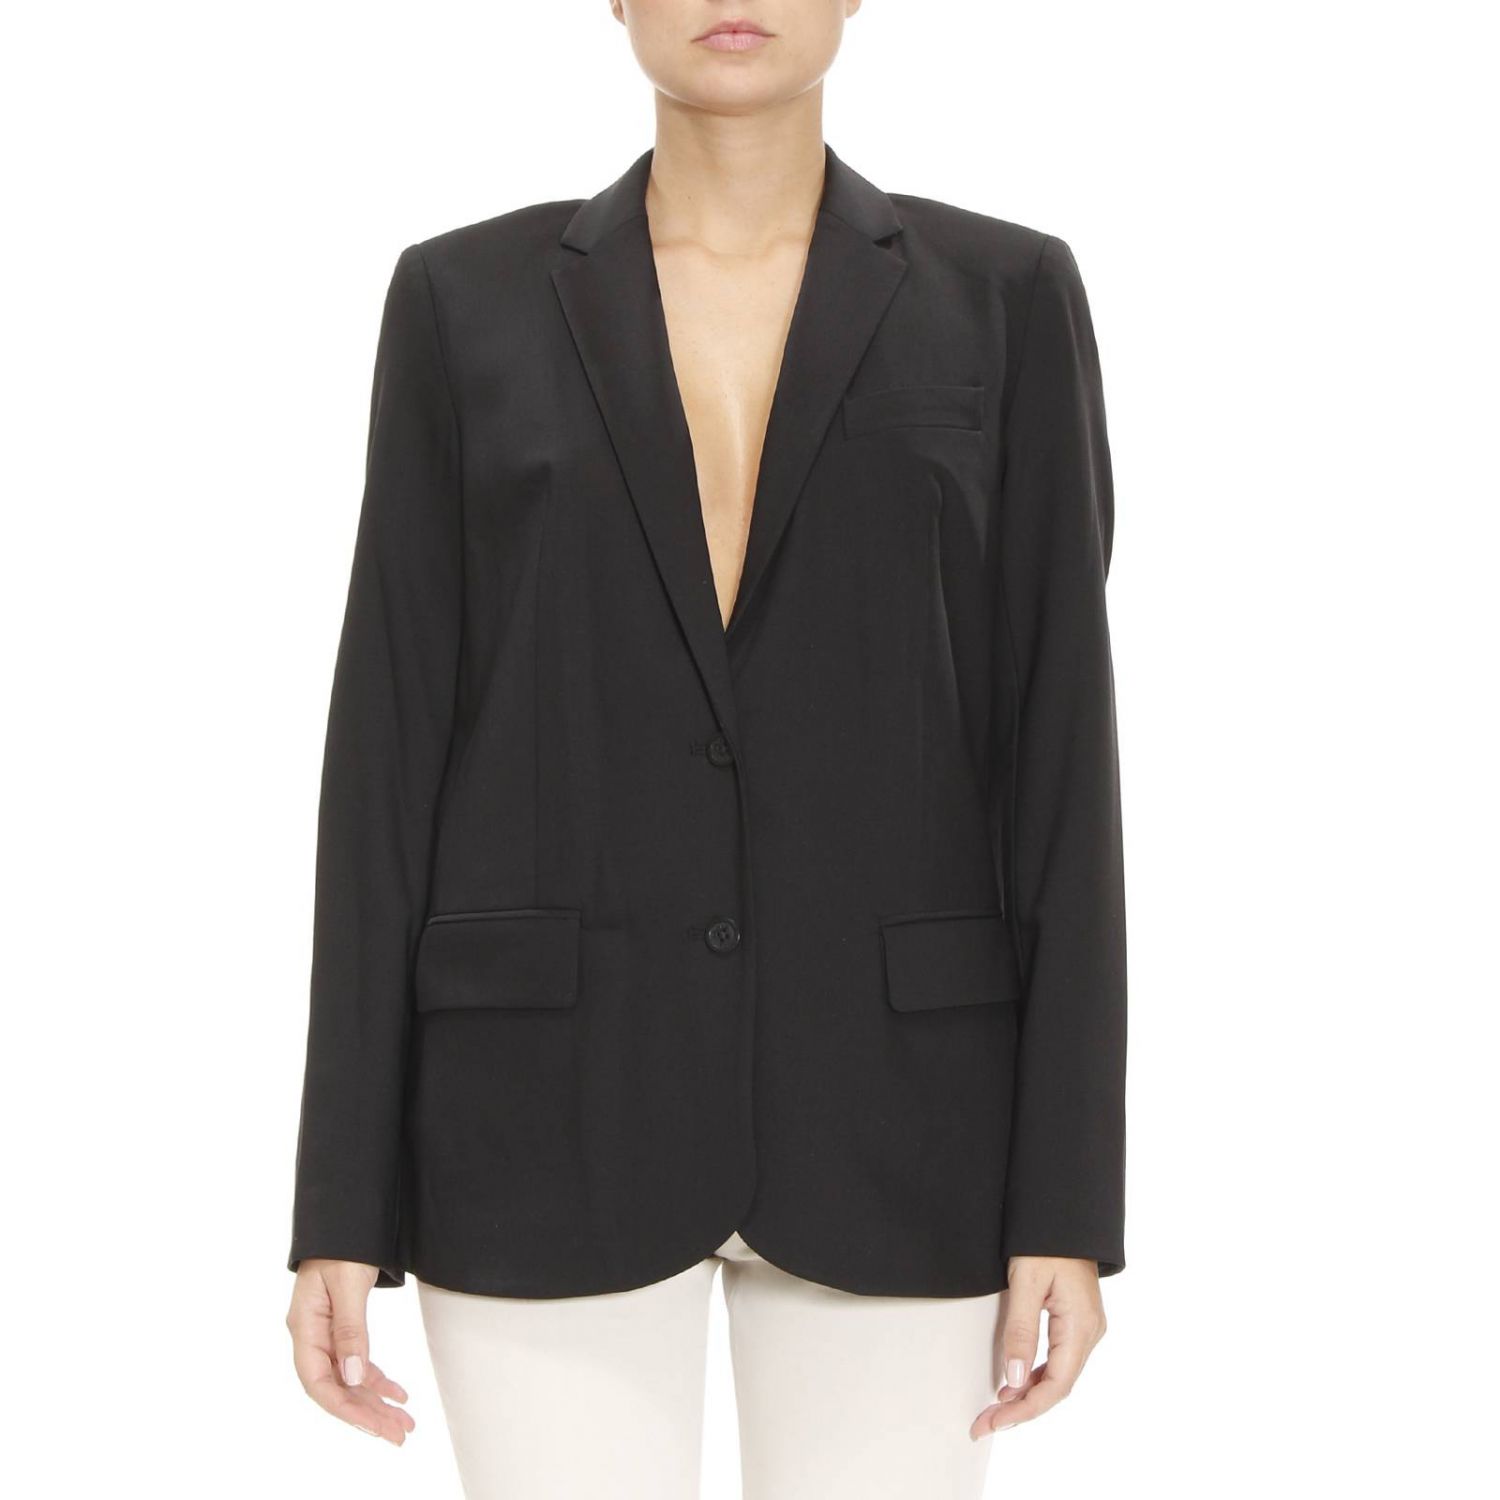 michael kors women's black blazer